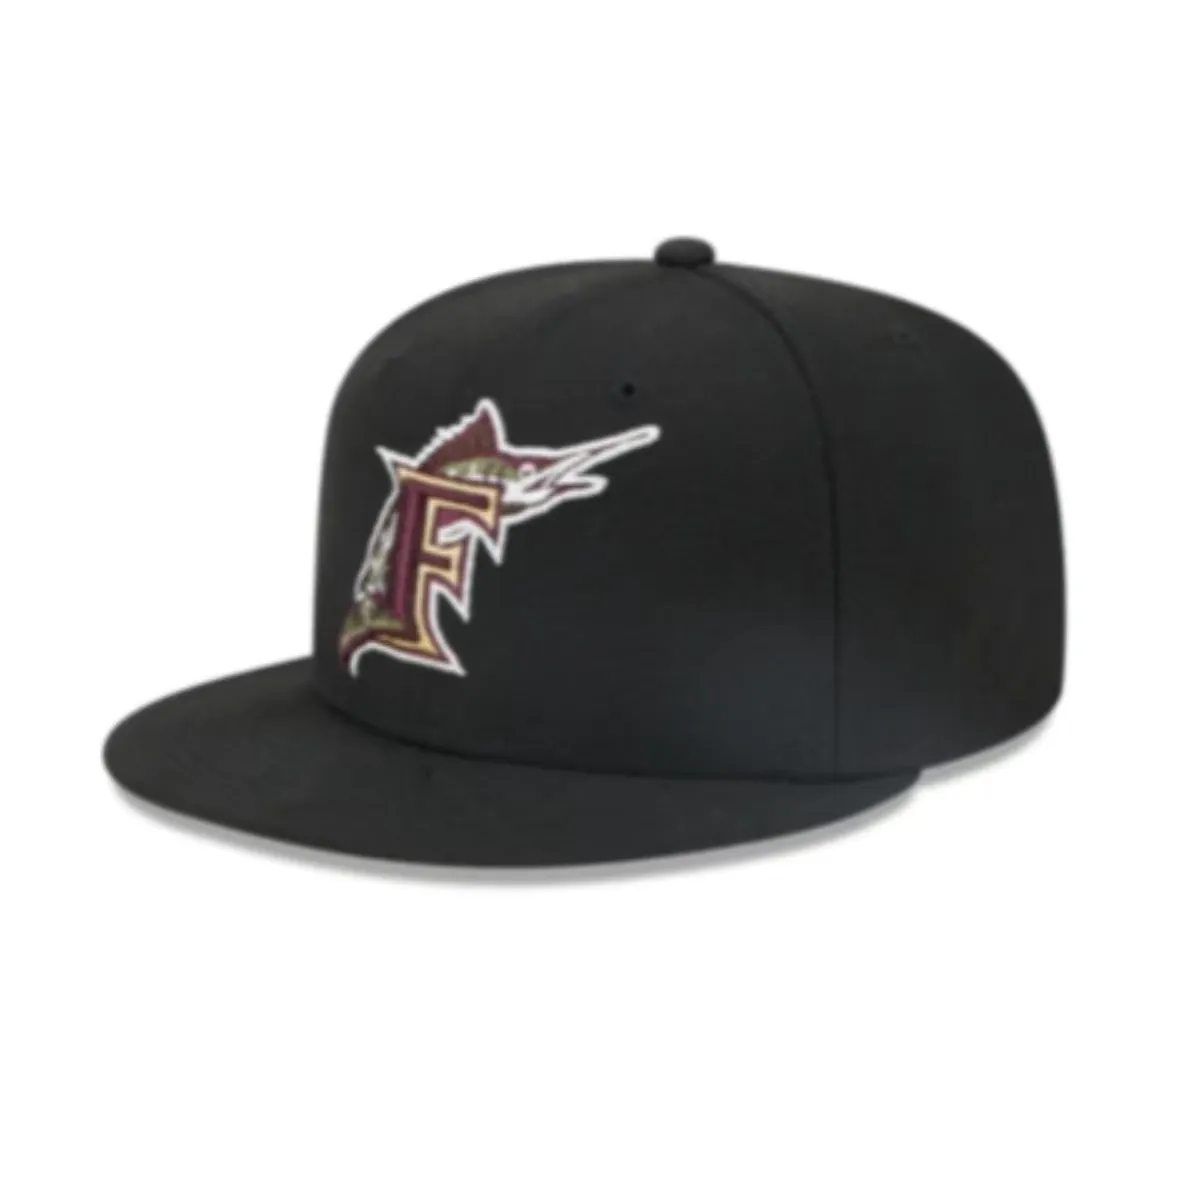 American Team Gorras neue klassische Herren Sportkappen Baseballkappe Original passende Hüte Trucker-Klappentaschen für Herren